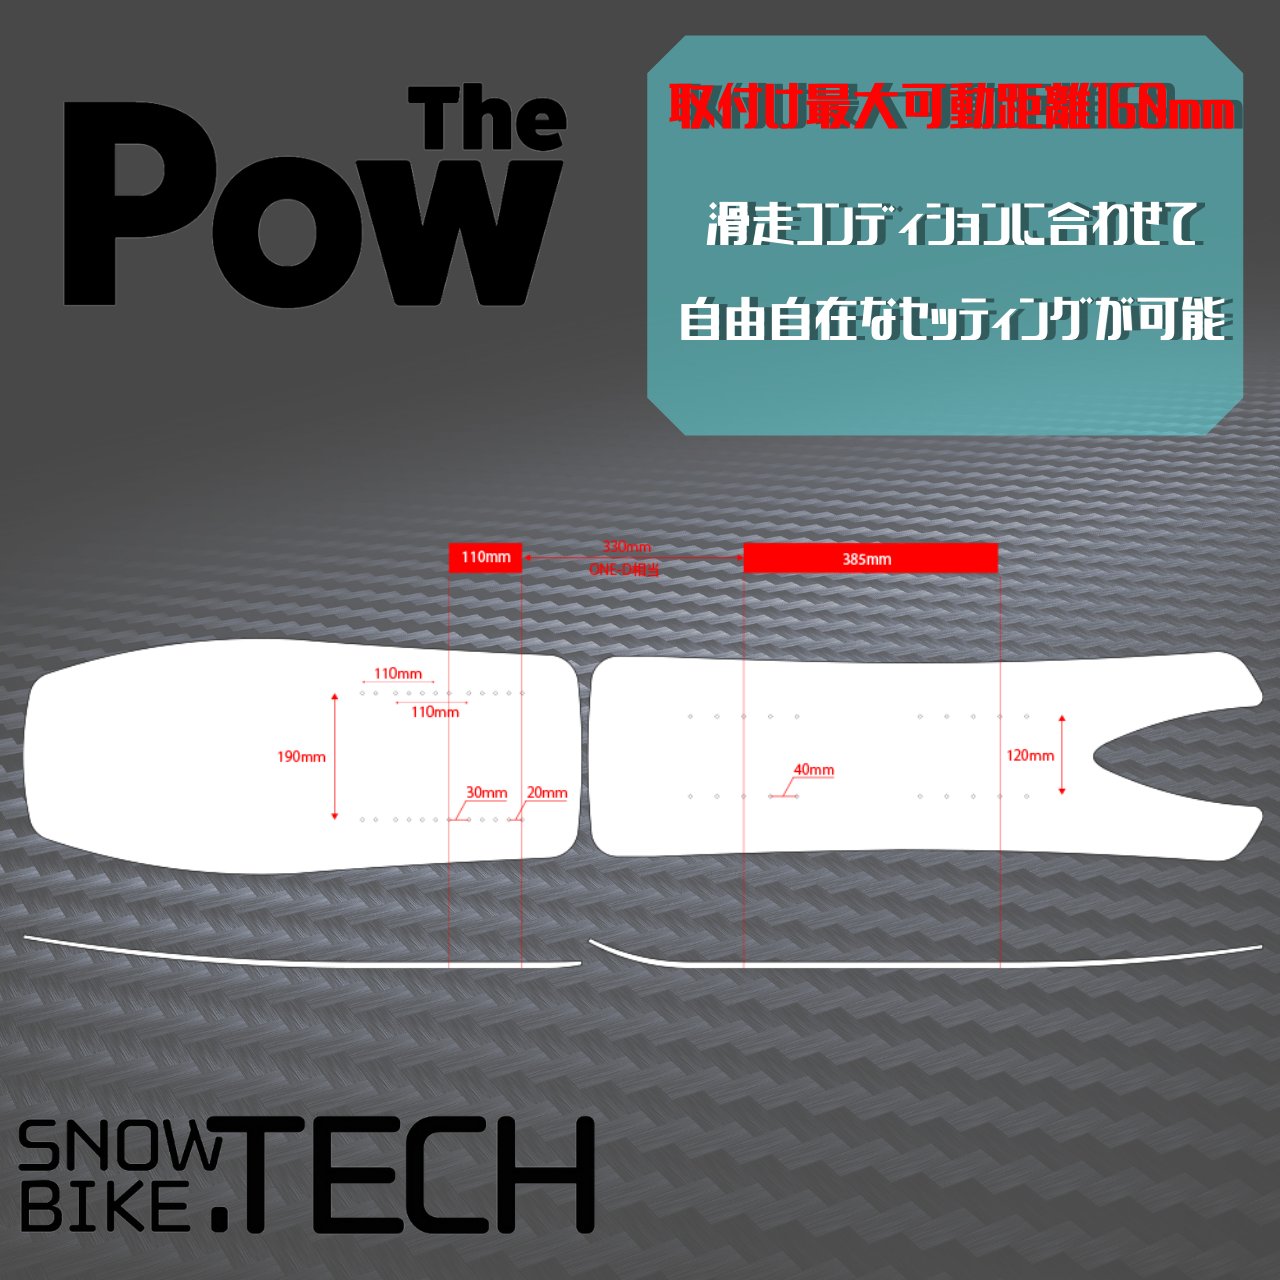 The Pow ザ・パウボード SNOWBIKE.TECH画像